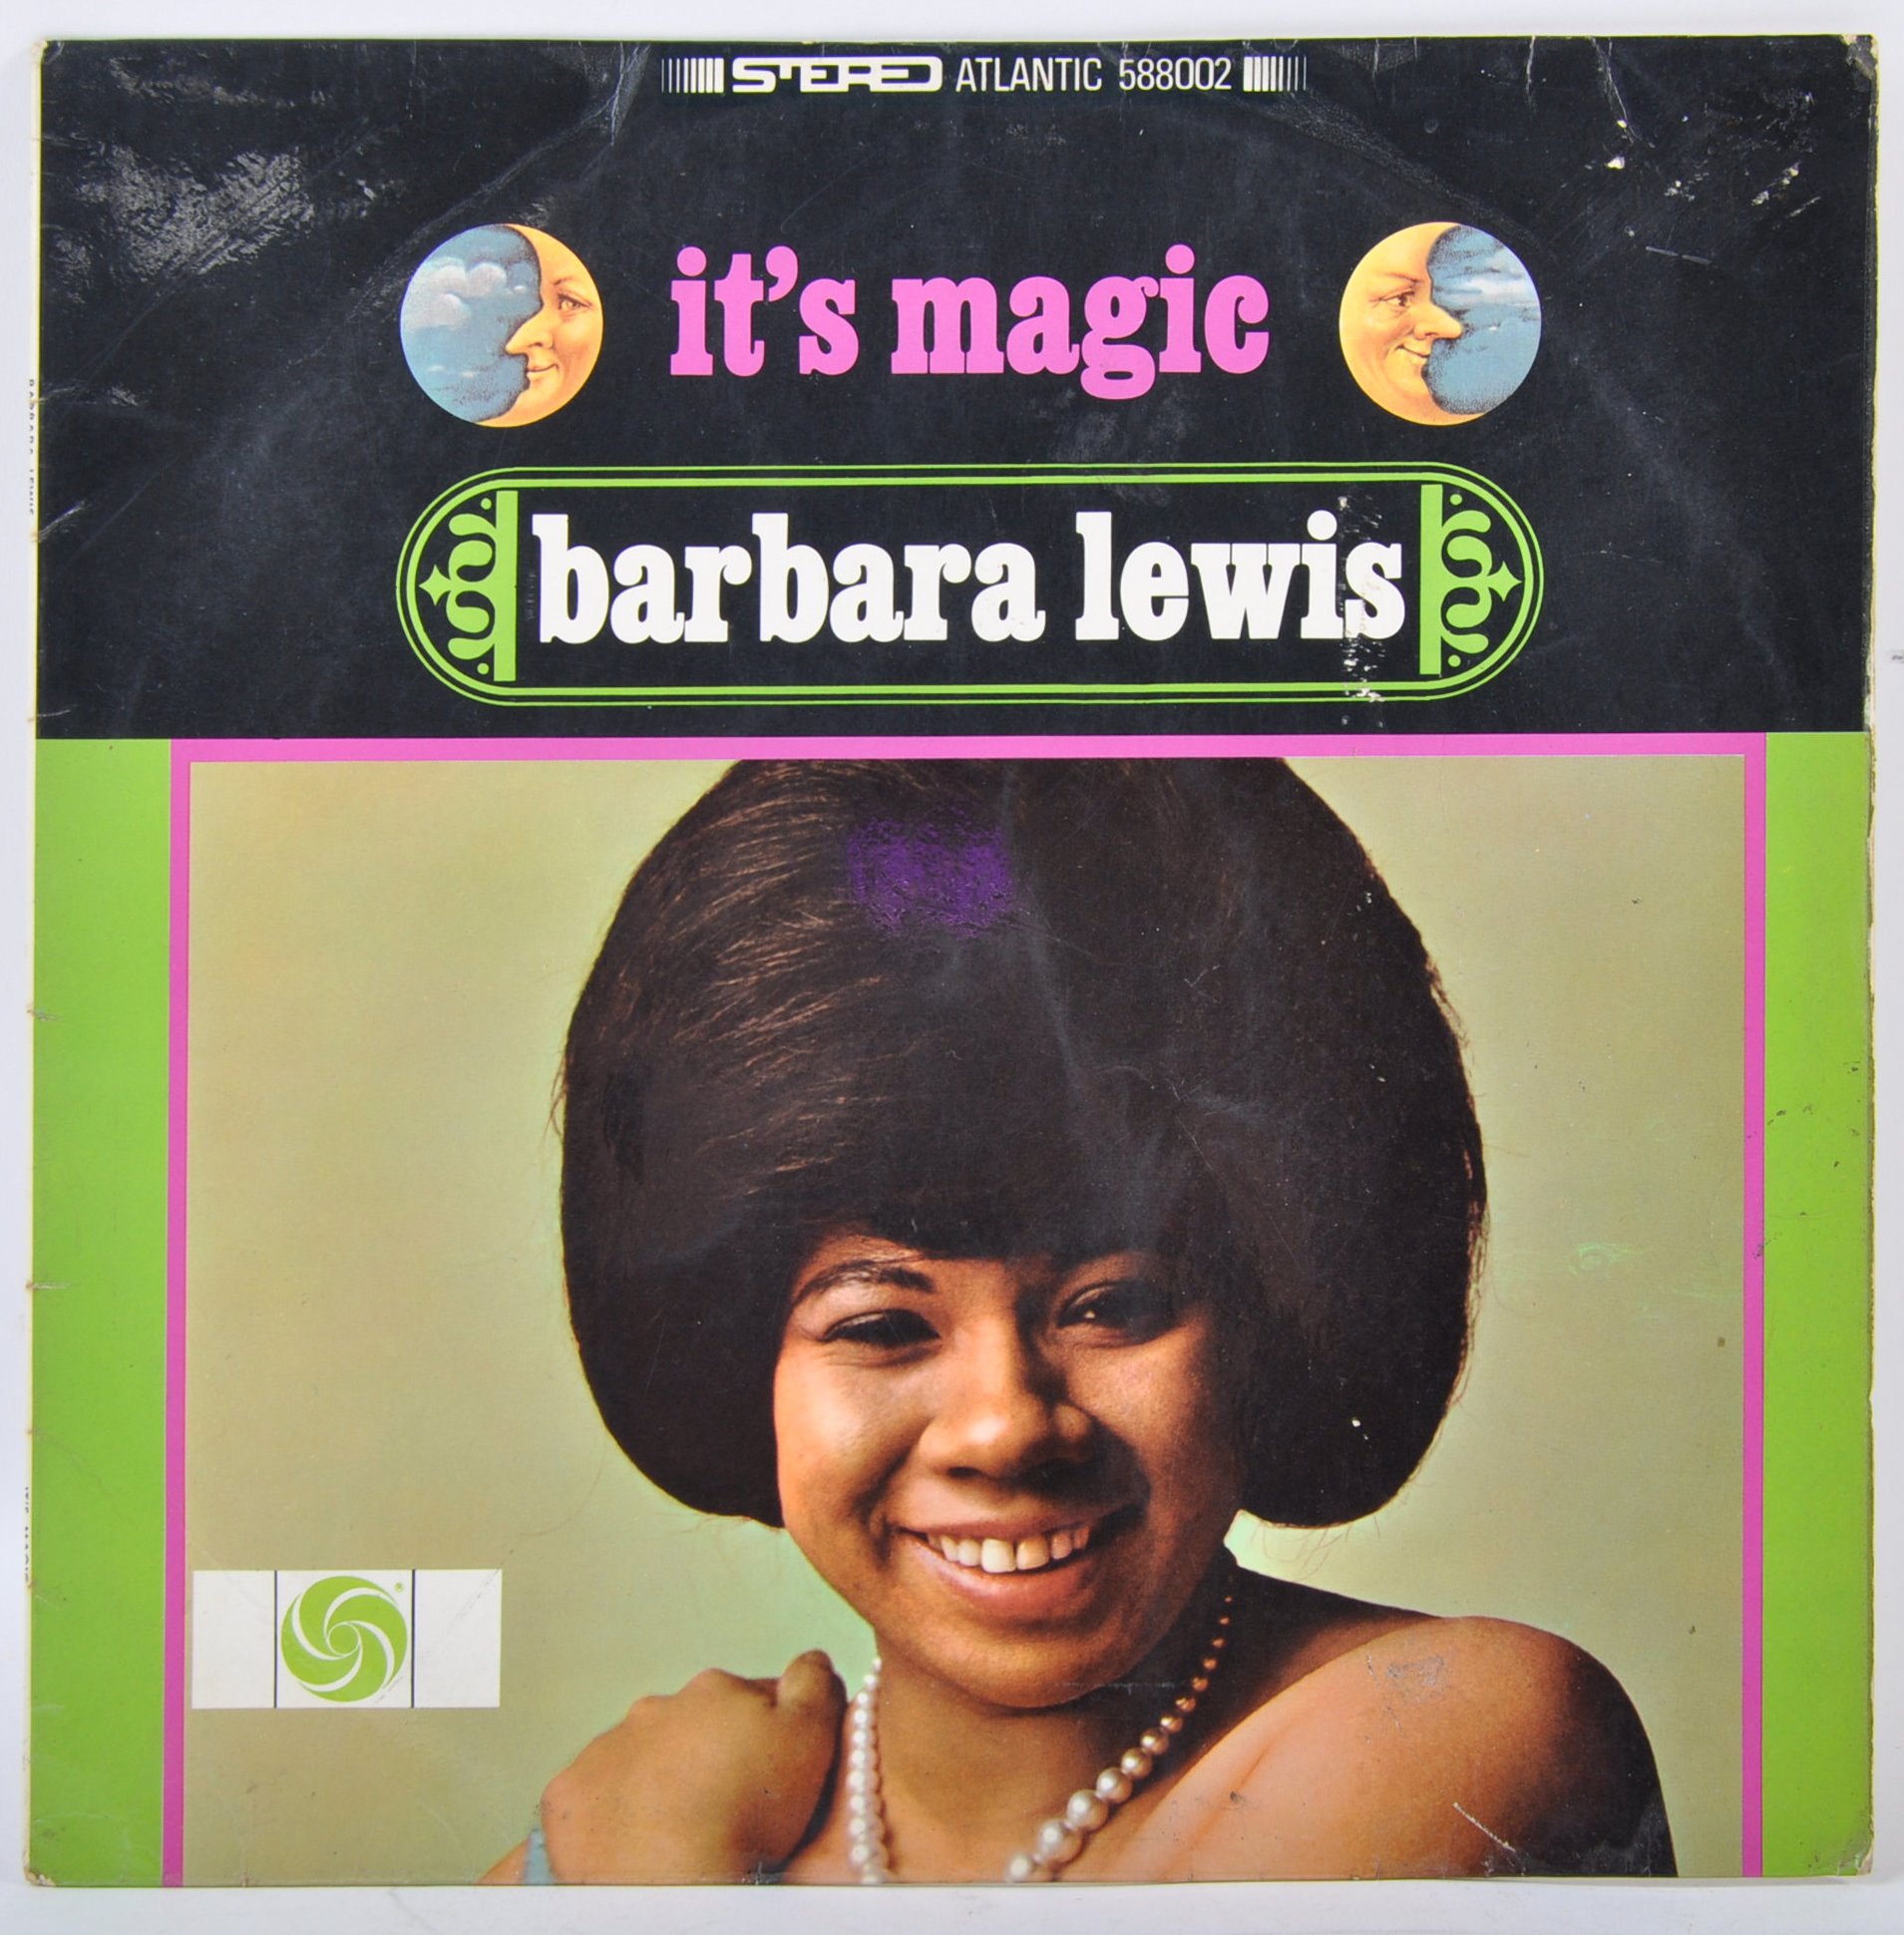 BARBARA LEWIS - IT'S MAGIC - 1966 ATLANTIC RELEASE - 588002